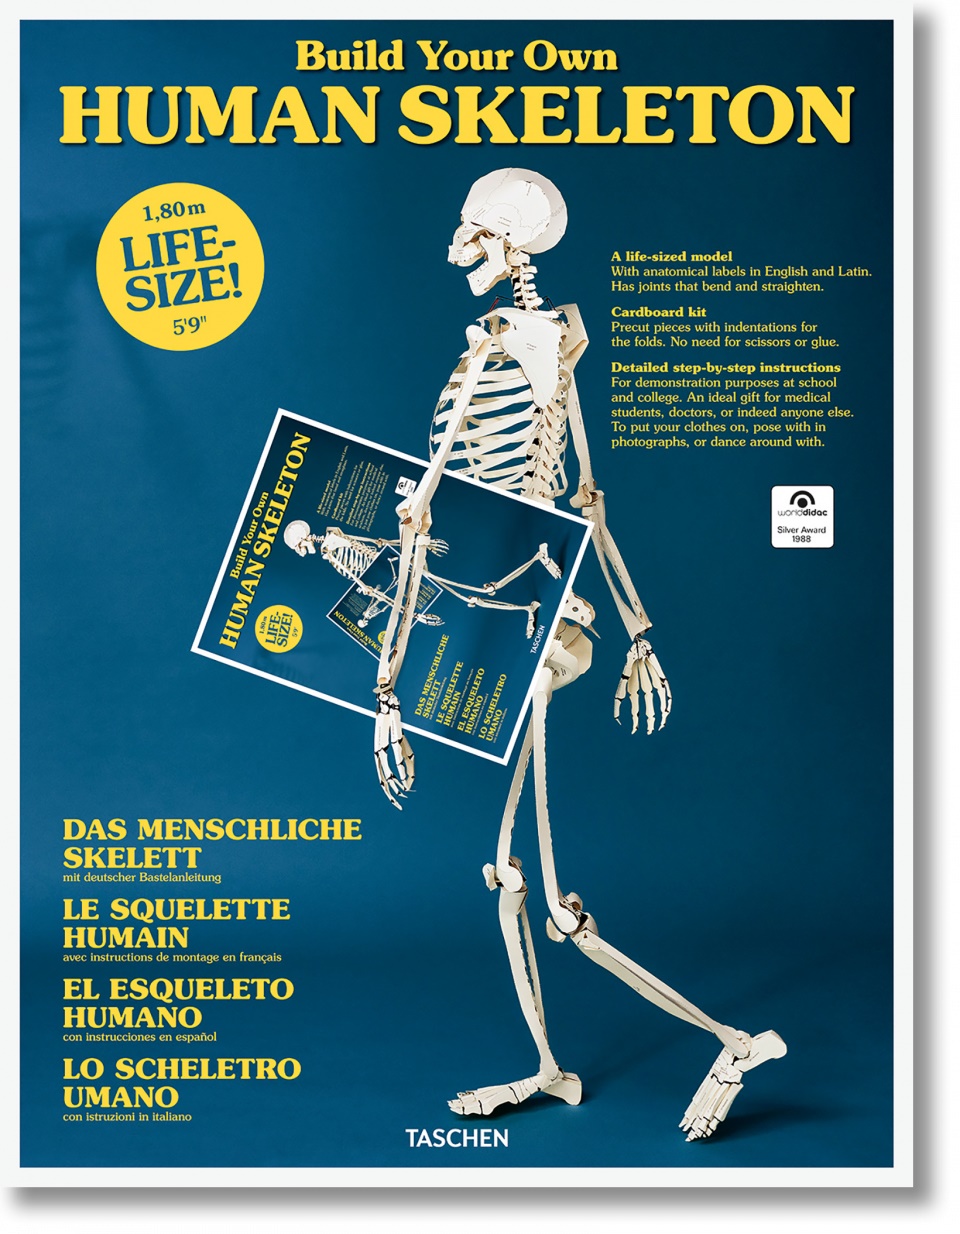 build-your-own-human-skeleton-life-size-popul-rn-nau-n-popul-rn-nau-n-cizojazy-n